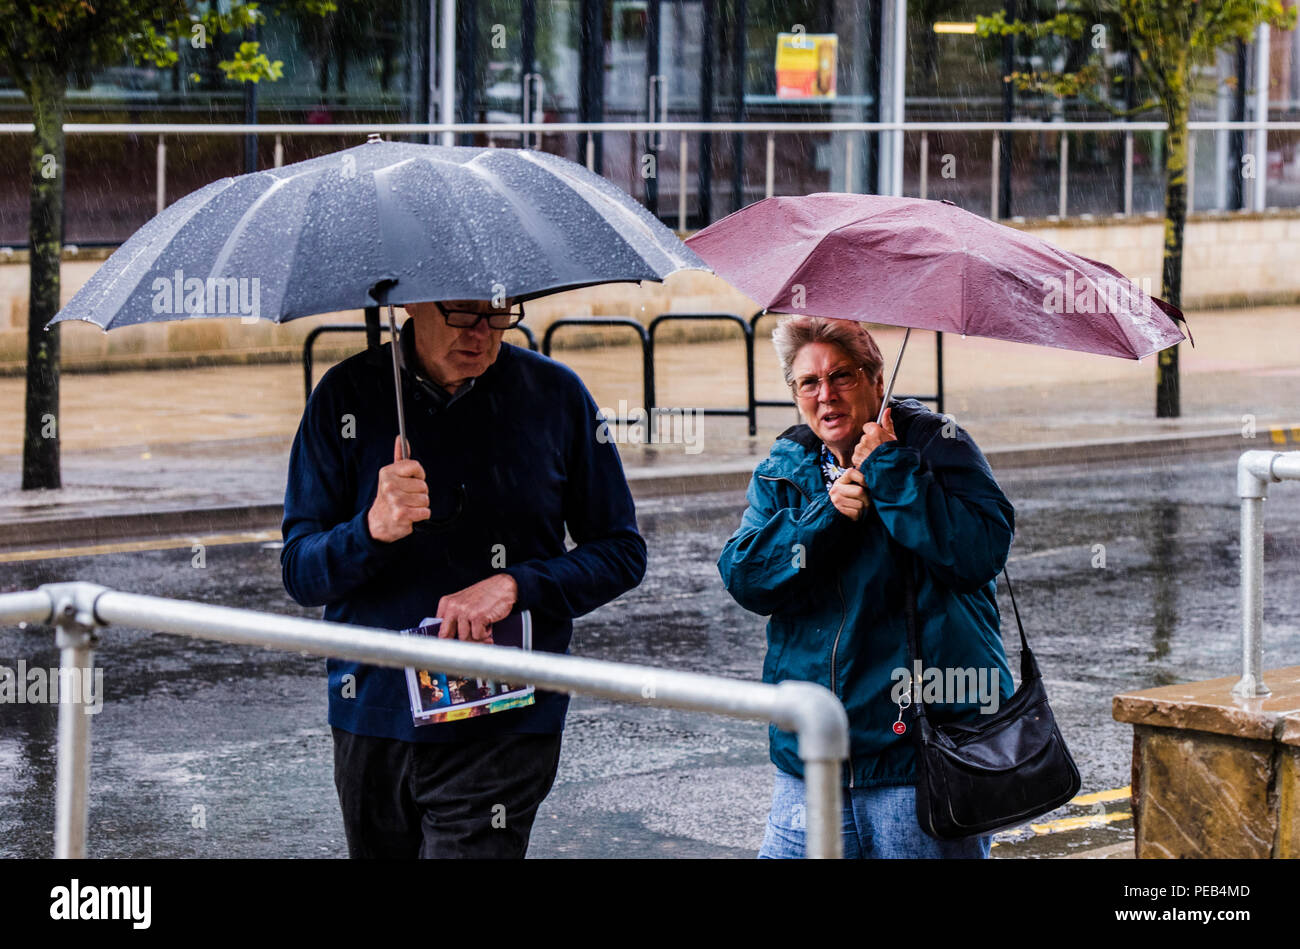 Man and woman walking in rainstorm, sheltering under umbrellas, Harrogate, North Yorkshire, UK Stock Photo